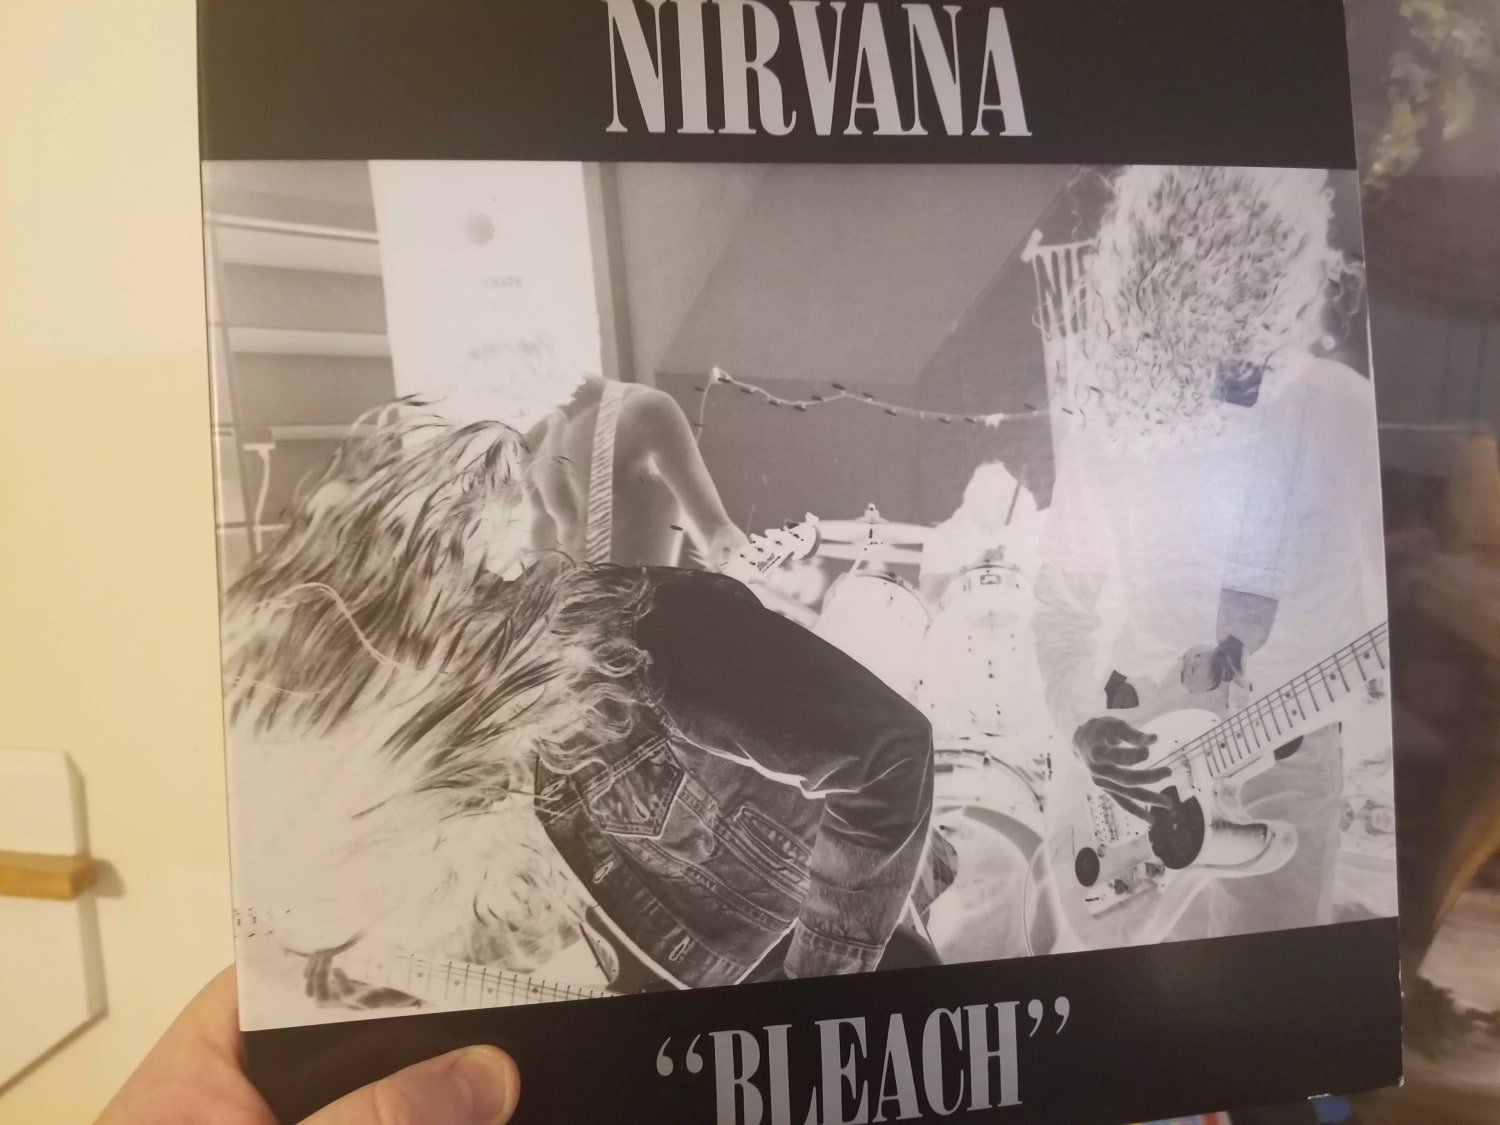 My first Nirvana purchase! (Bleach)